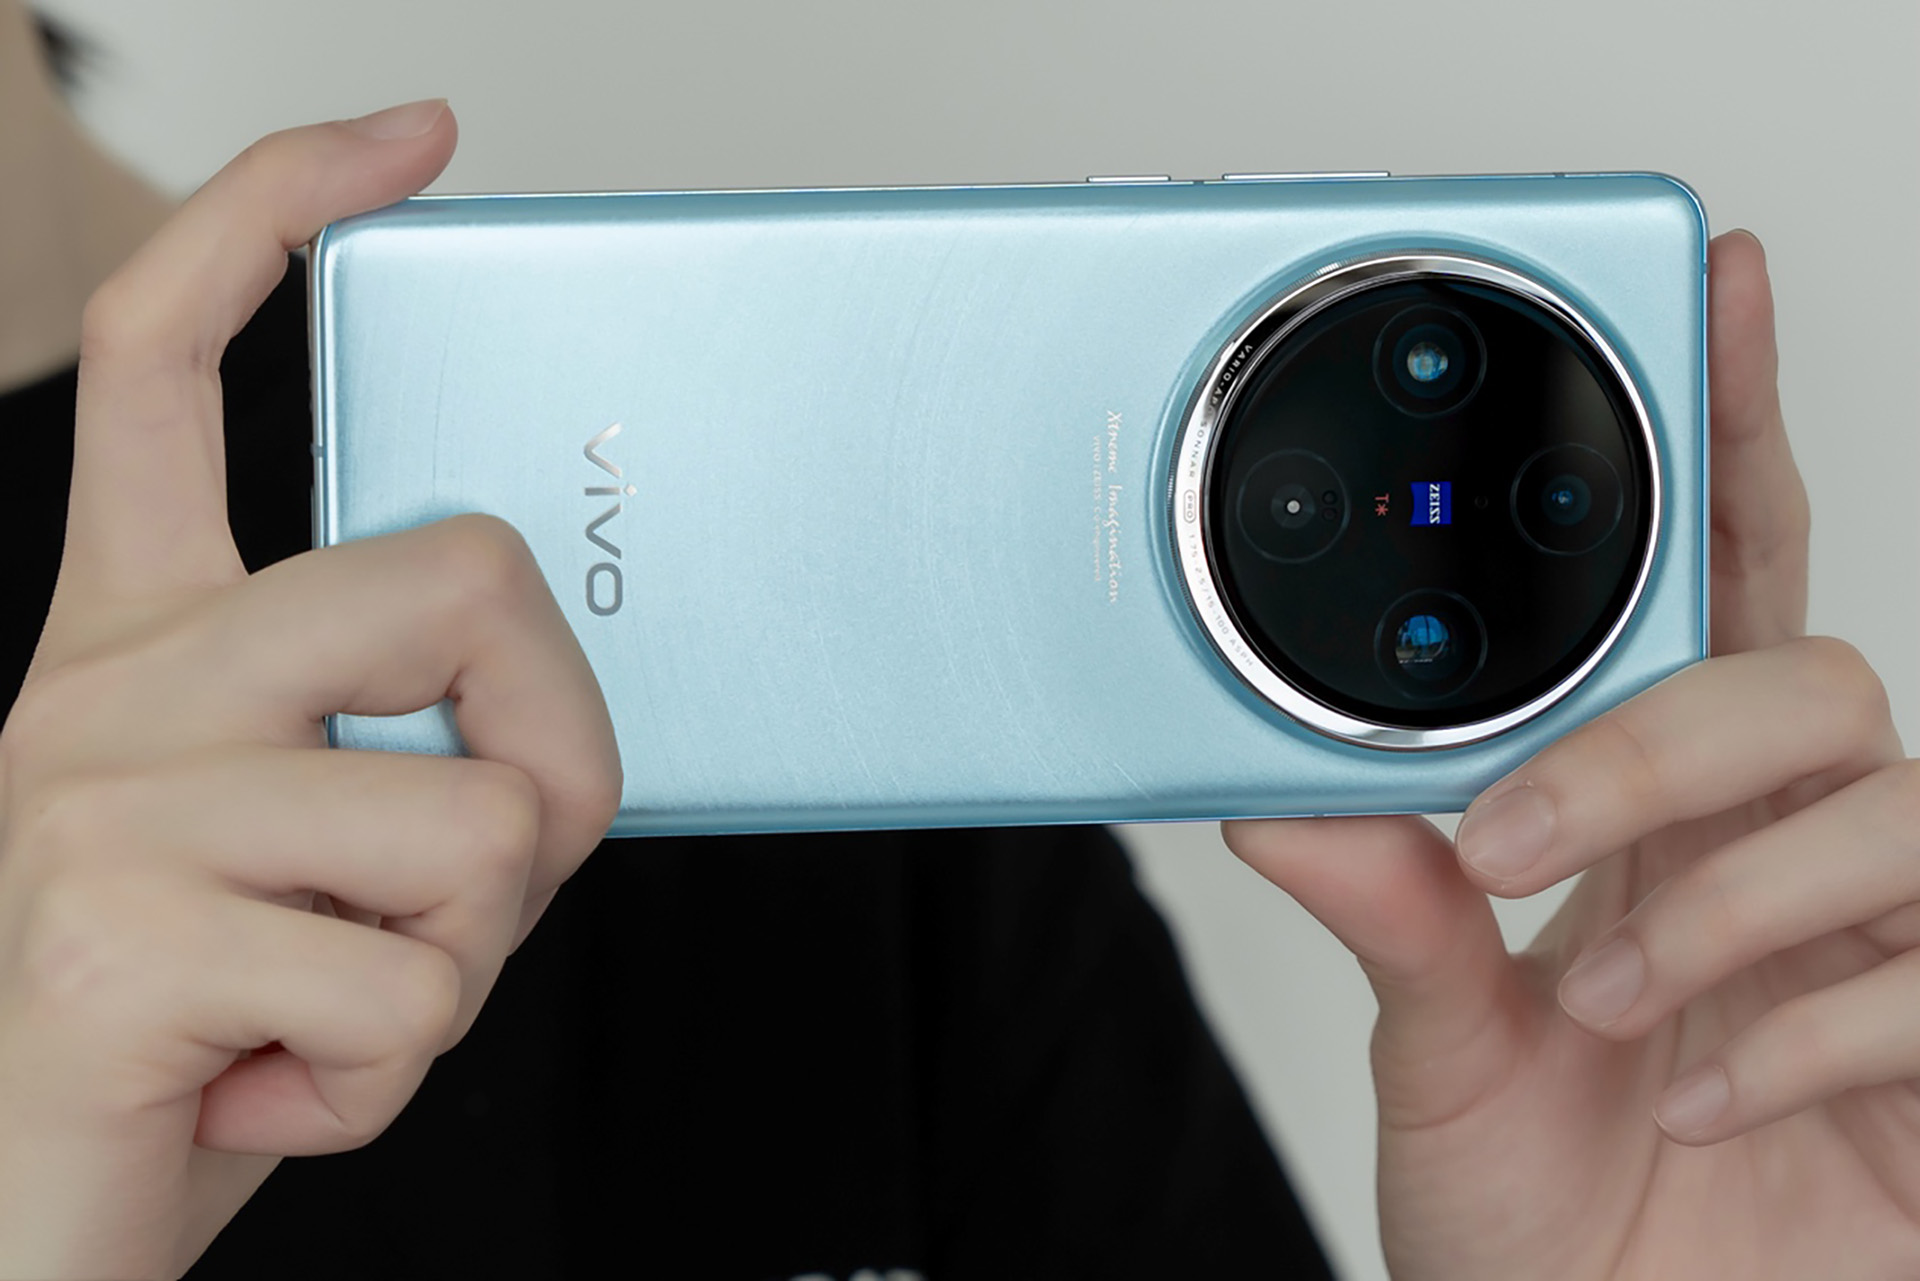 Vivo X100 Pro Review: Let the smartphone camera wars begin